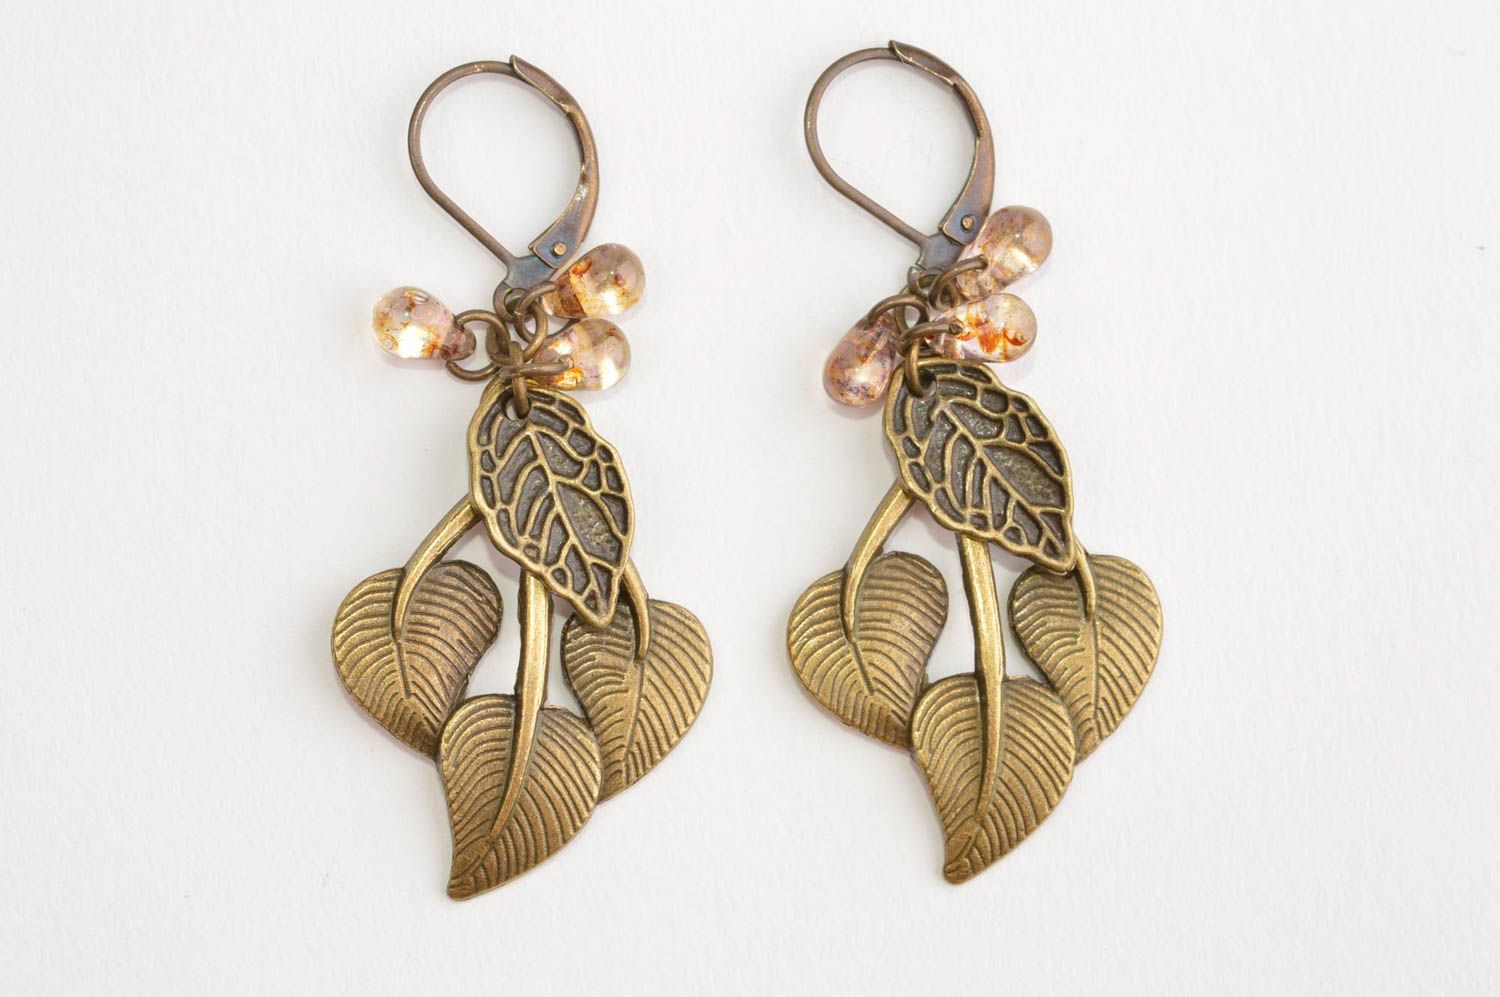 Handmade crystal earrings metal earrings with charms long earrings for women photo 2